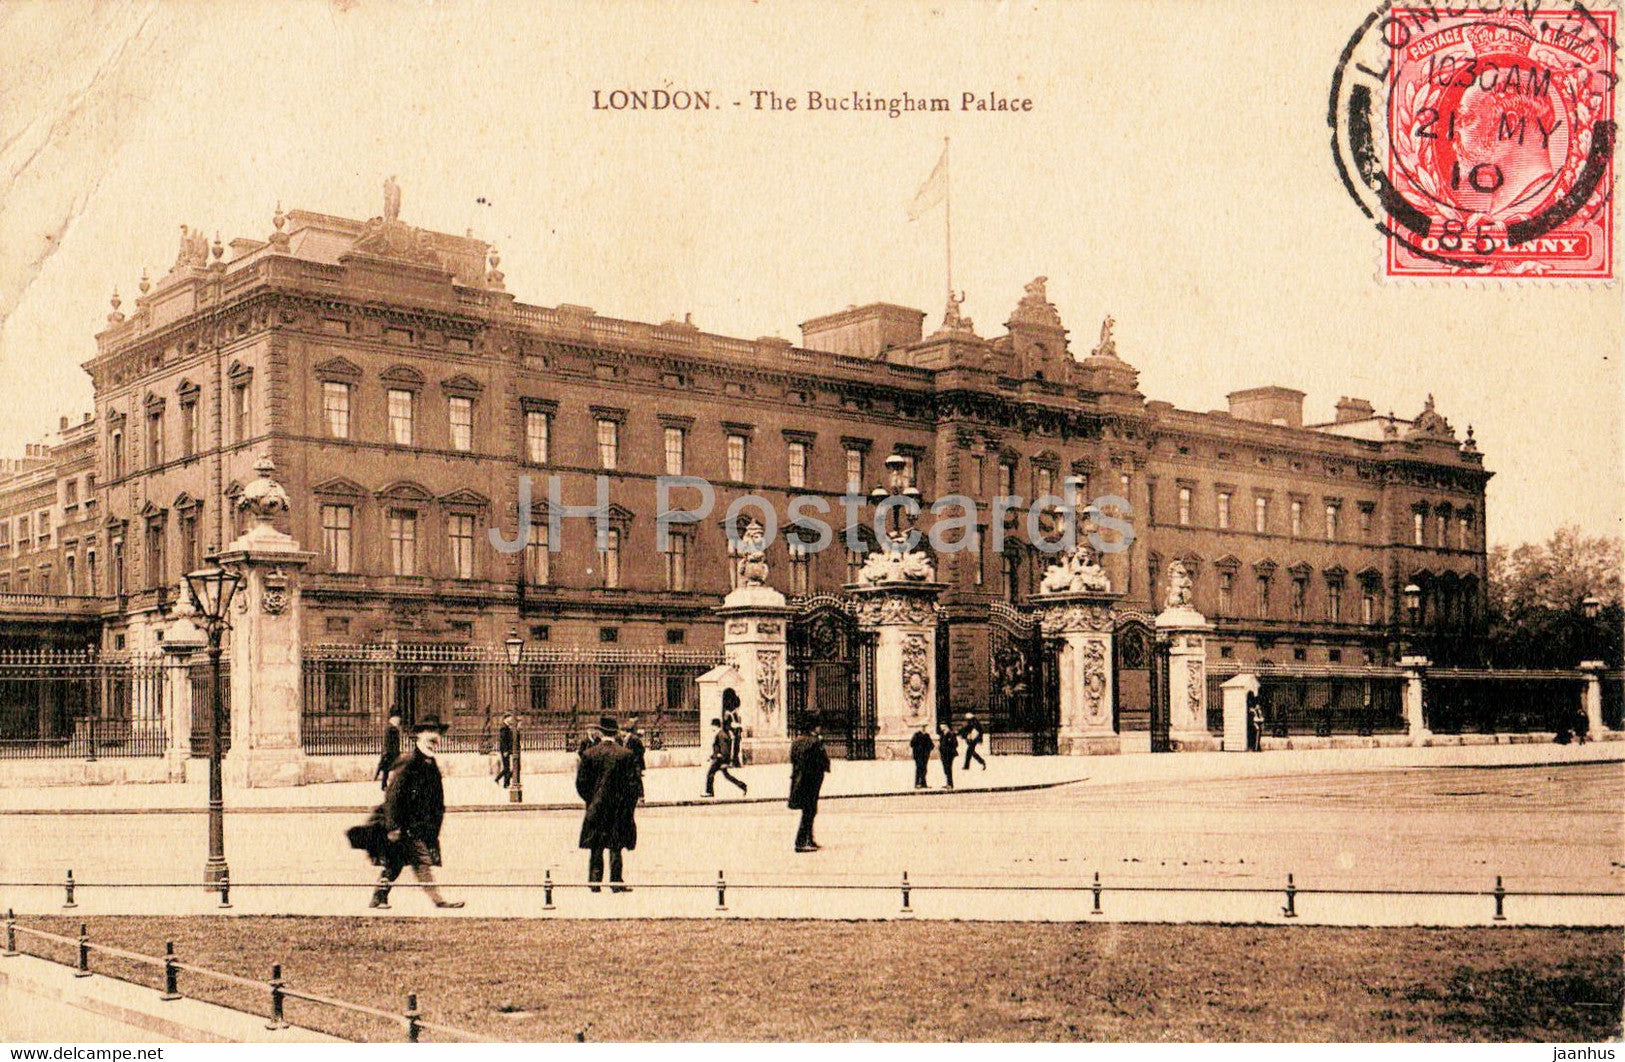 London - The Buckingham palace - old postcard - England - 1910 - United Kingdom - used - JH Postcards